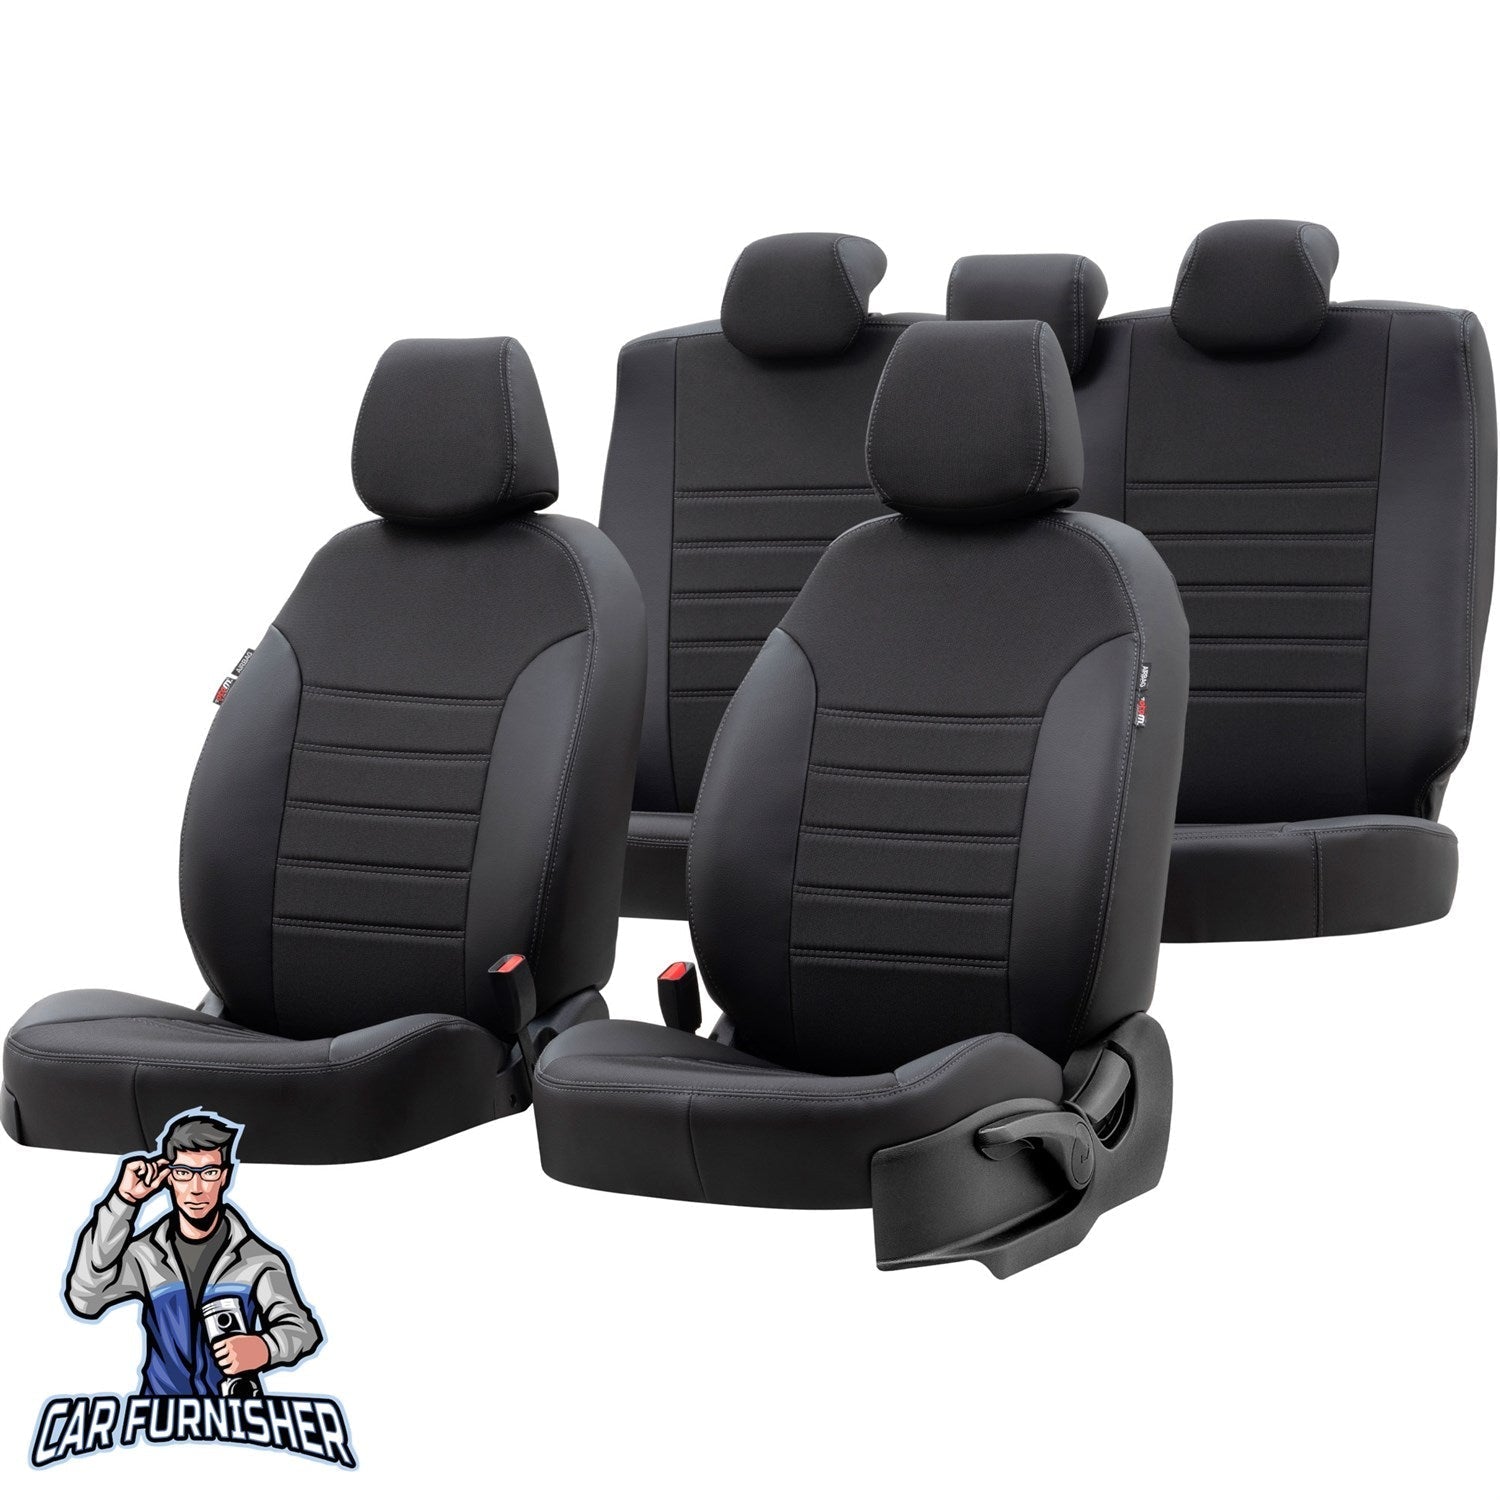 Chevrolet Cruze Car Seat Covers 2009-2016 Paris Design Black Full Set (5 Seats + Handrest) Leather & Fabric